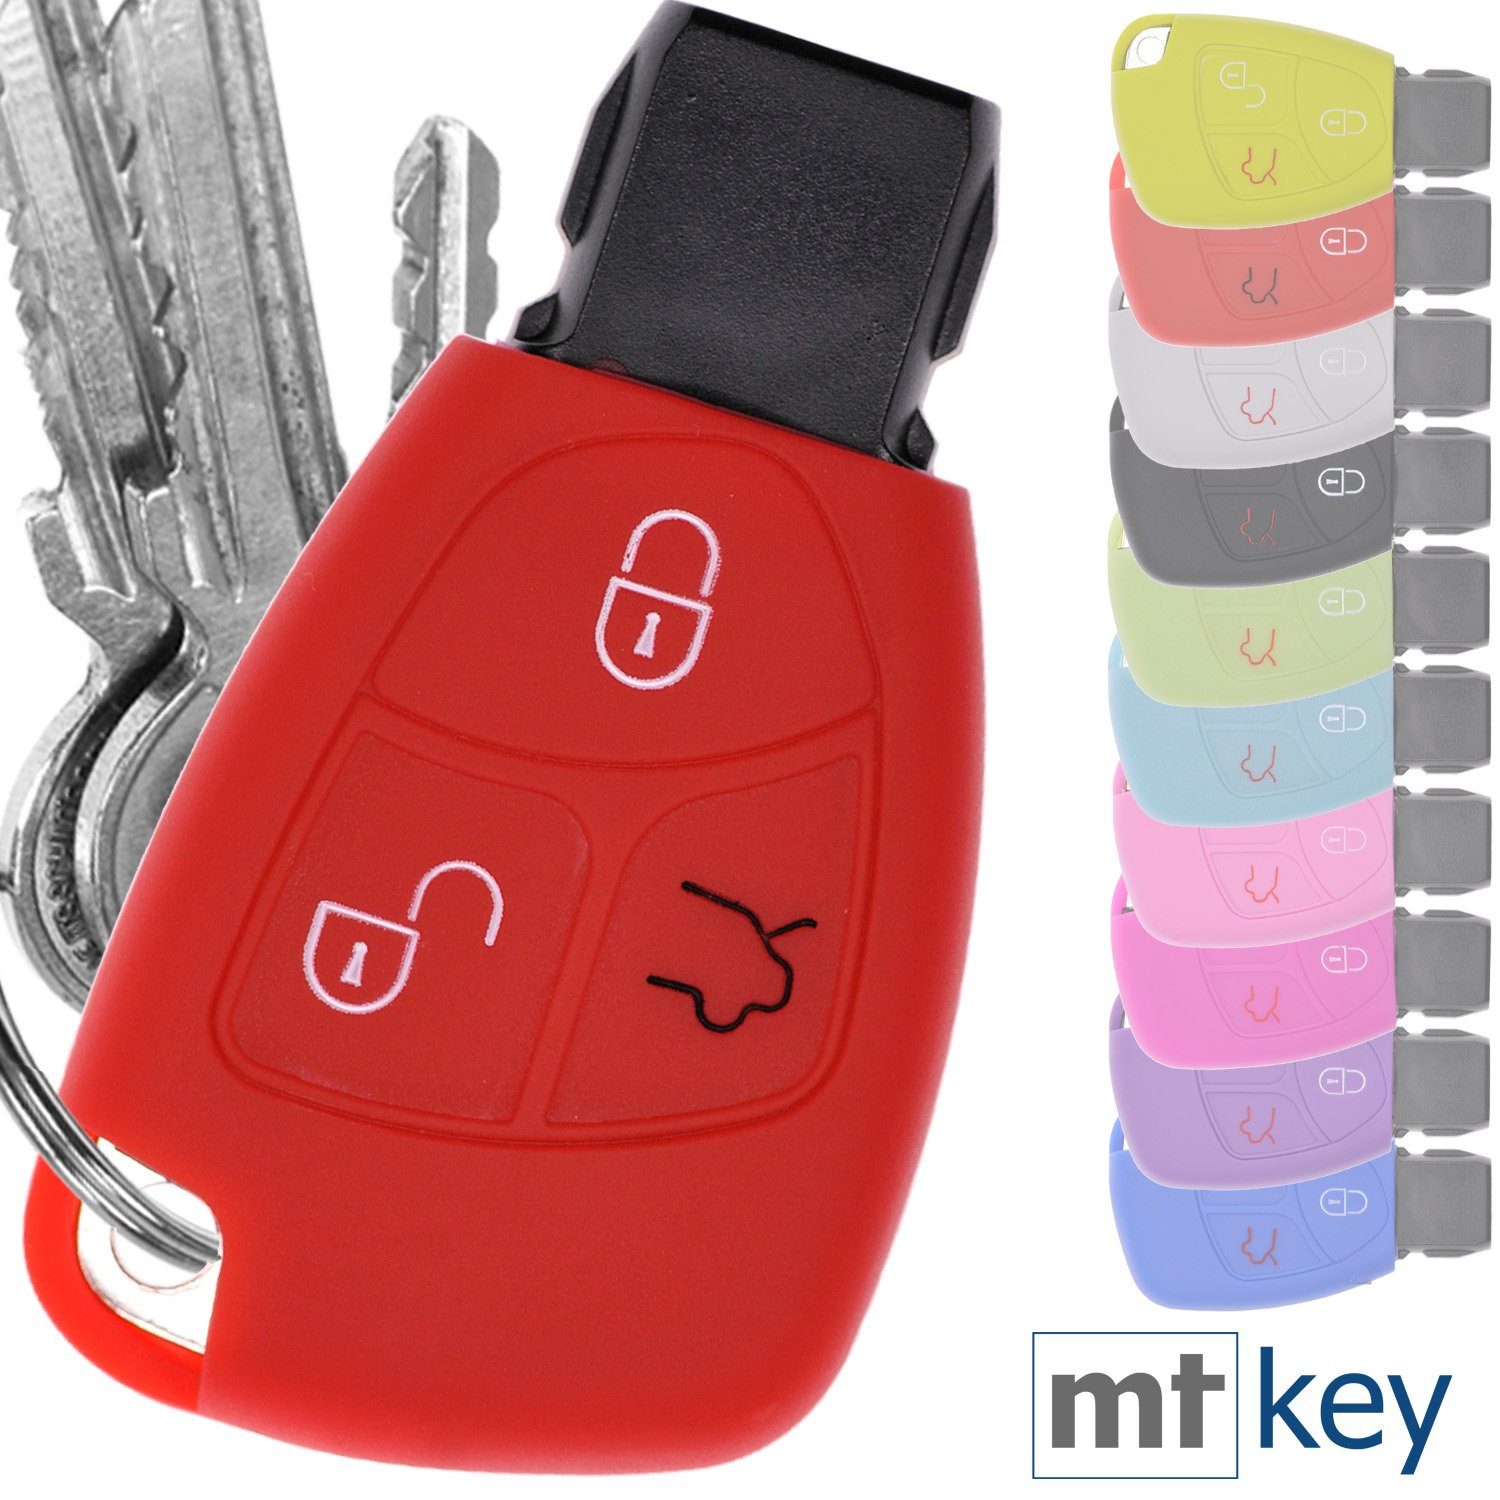 mt-key Schlüsseltasche Autoschlüssel Softcase Silikon Schutzhülle Rot, für Mercedes Benz W204 W245 S203 A209 C-Klasse CLK SLK W211 W203 W176